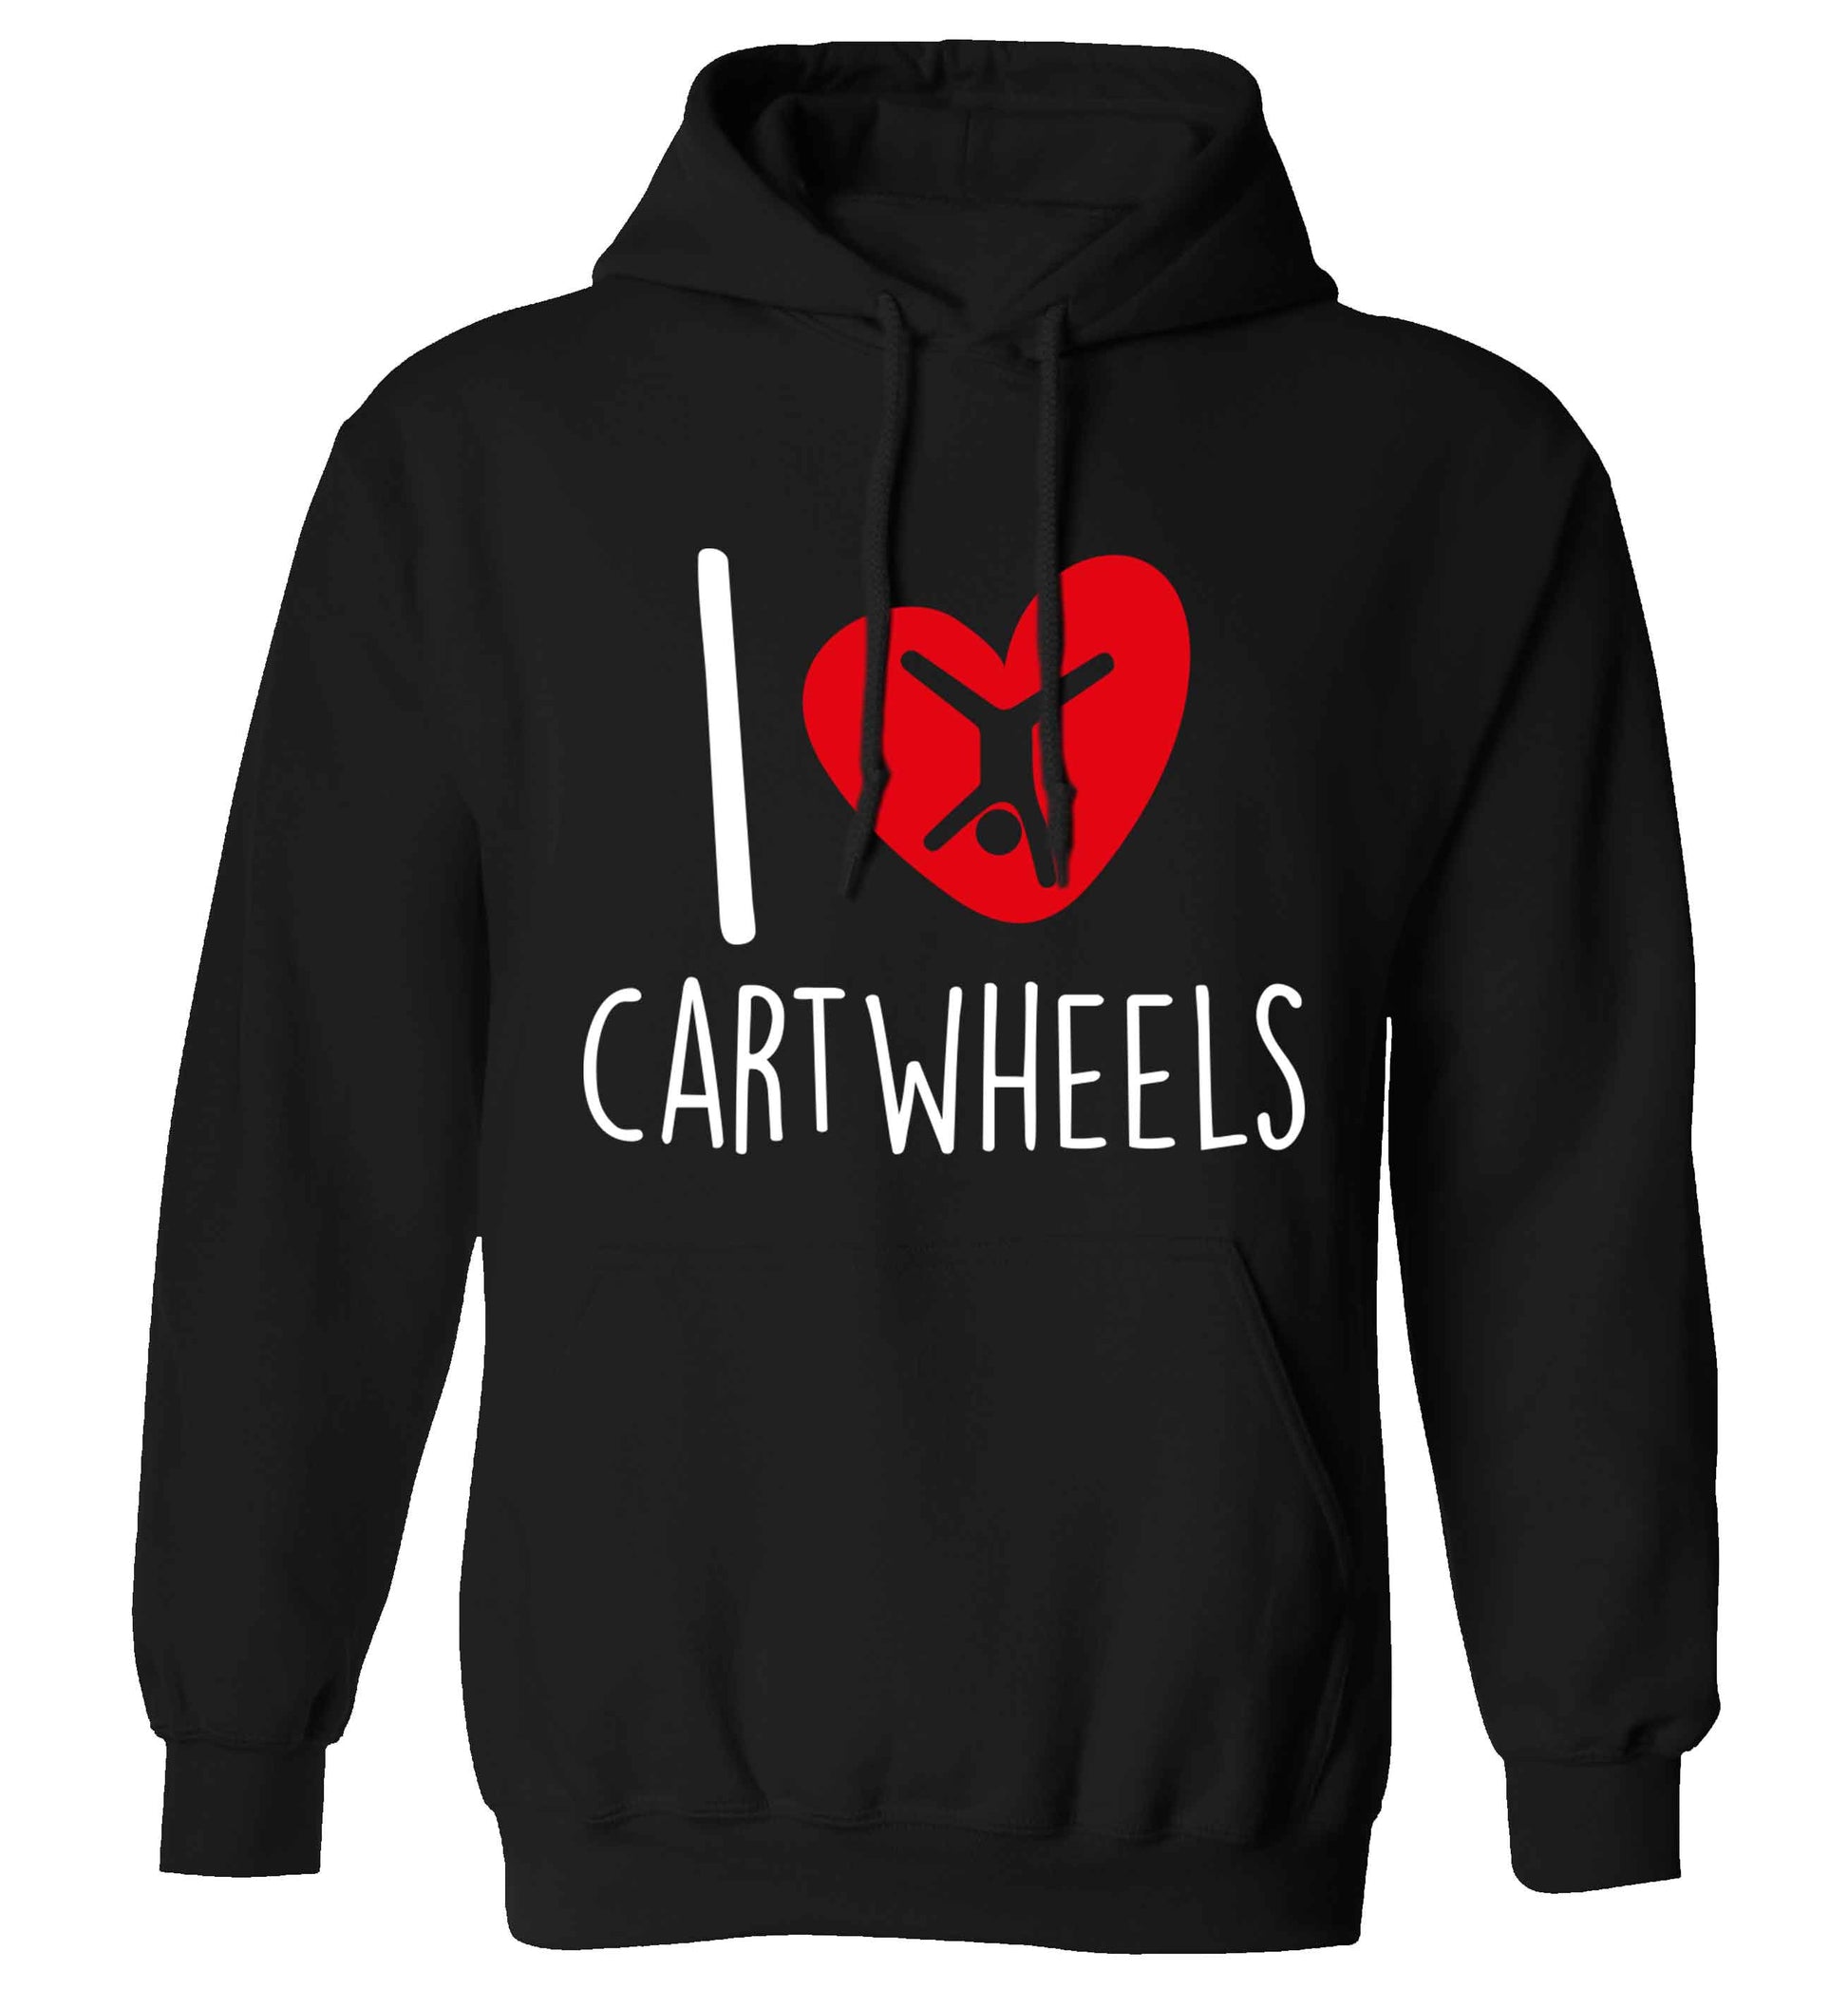 I love cartwheels adults unisex black hoodie 2XL